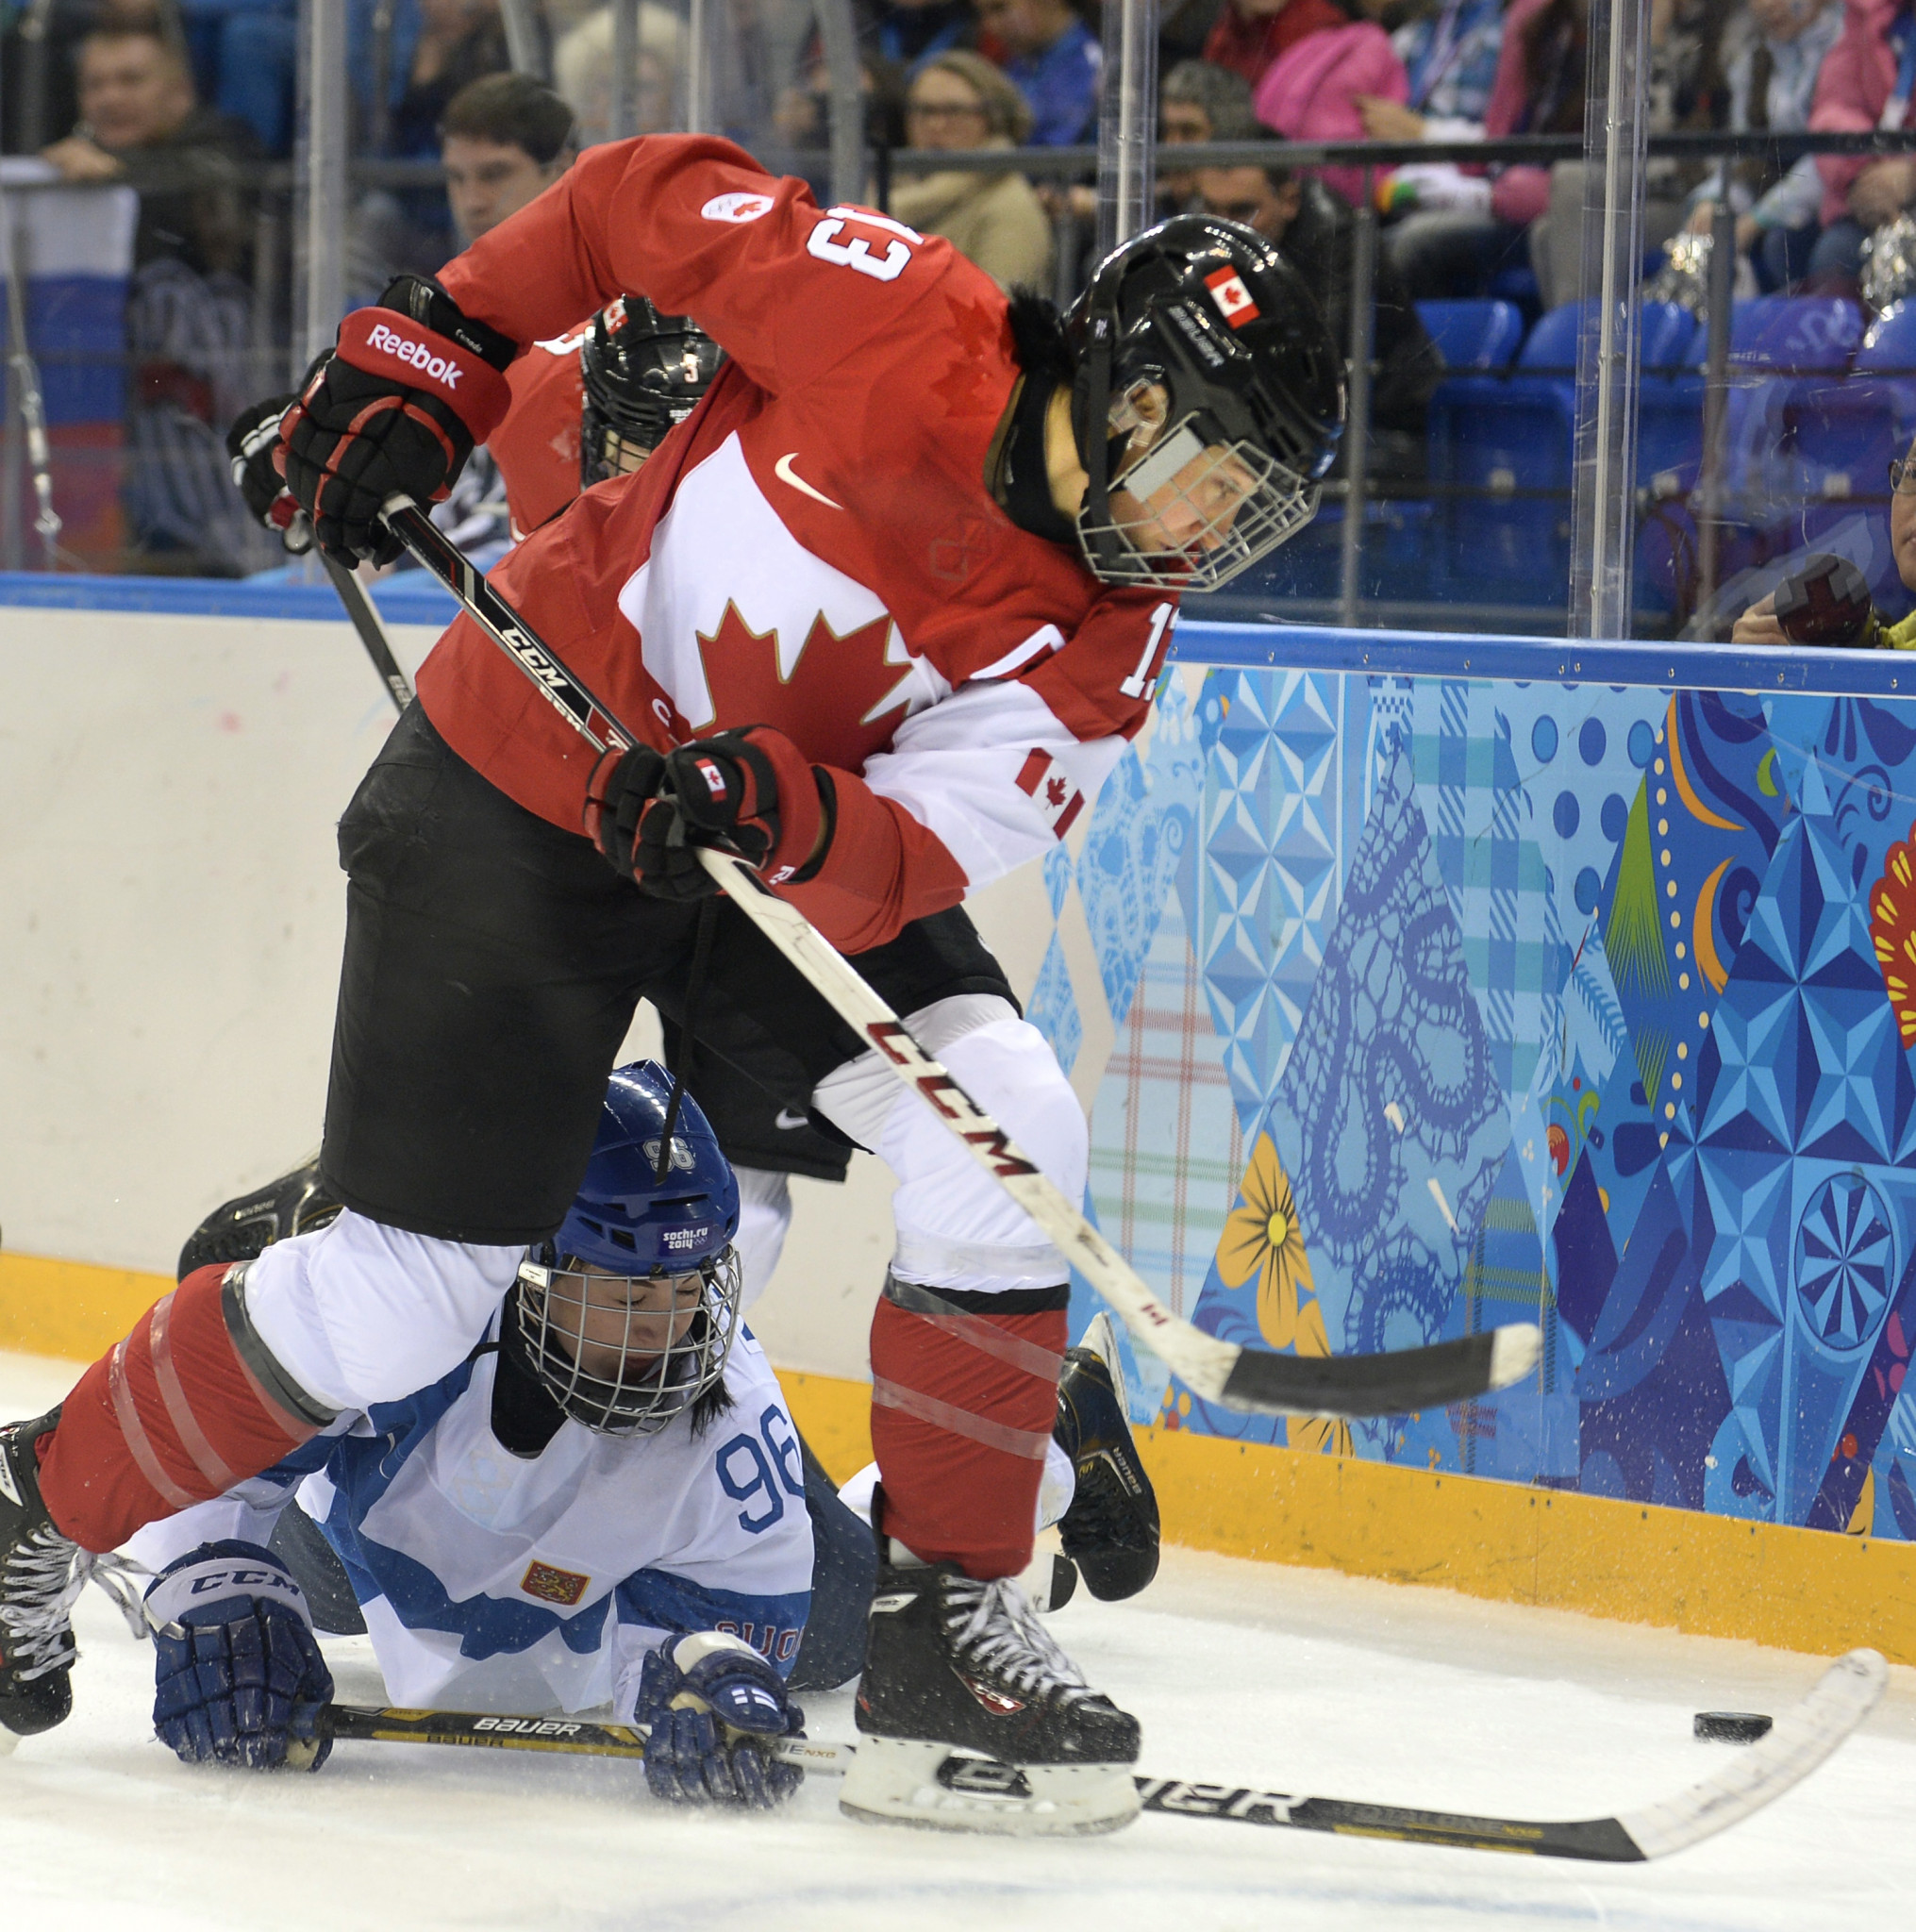 Quadruple Olympic gold medallist Ouellette announces ice hockey retirement